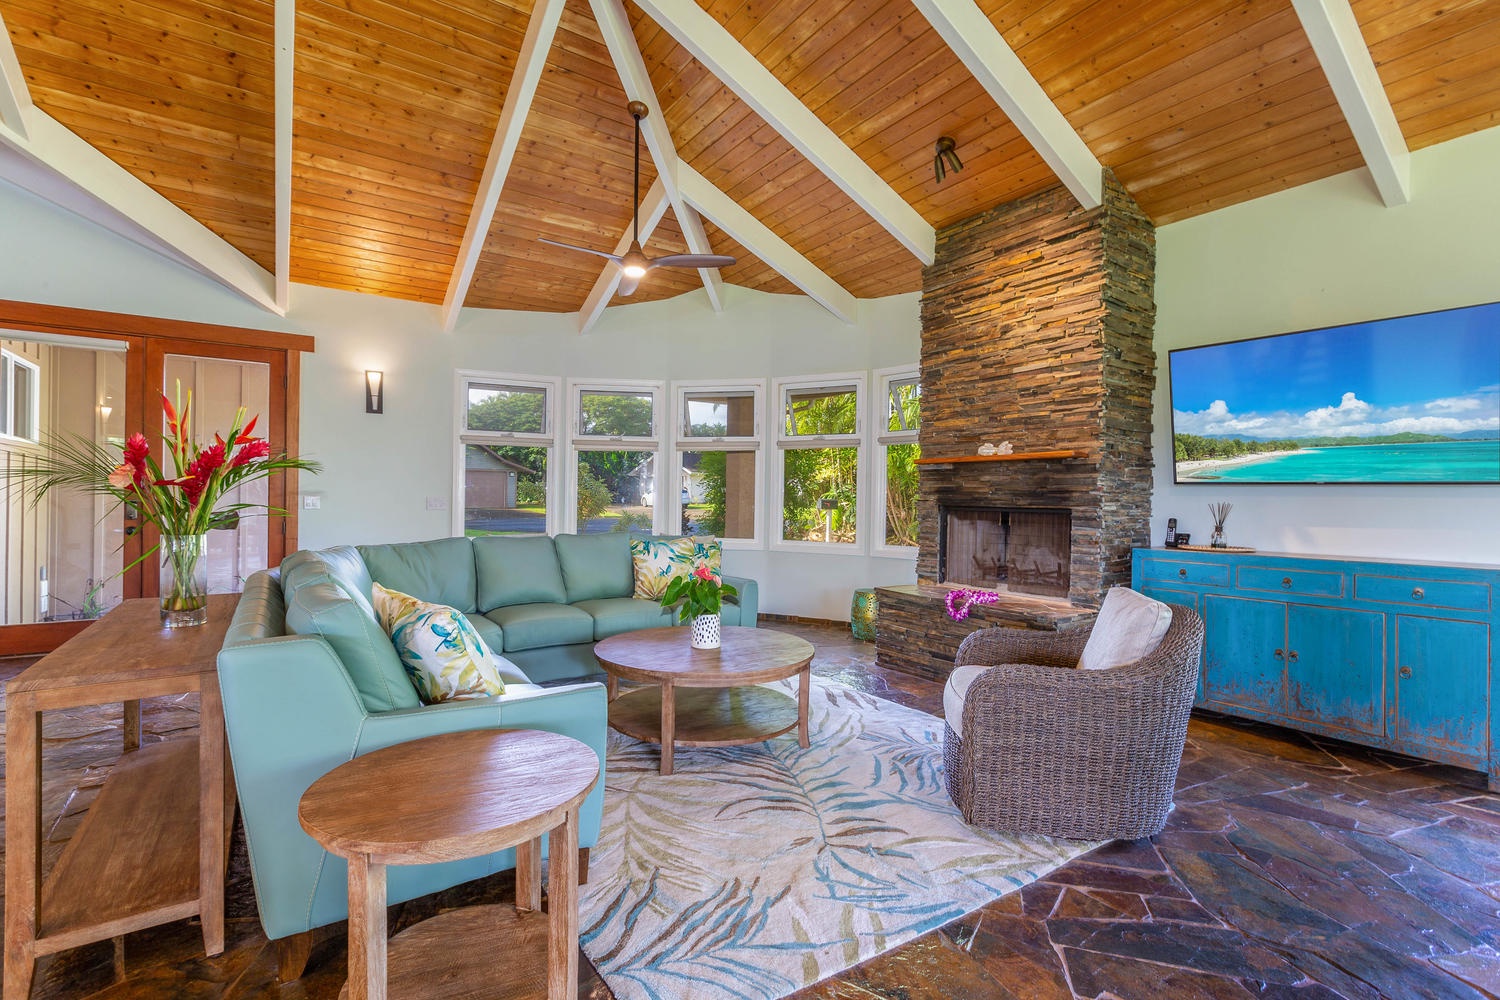 Princeville Vacation Rentals, Pohaku Villa - The fireplace makes a beautiful focal point